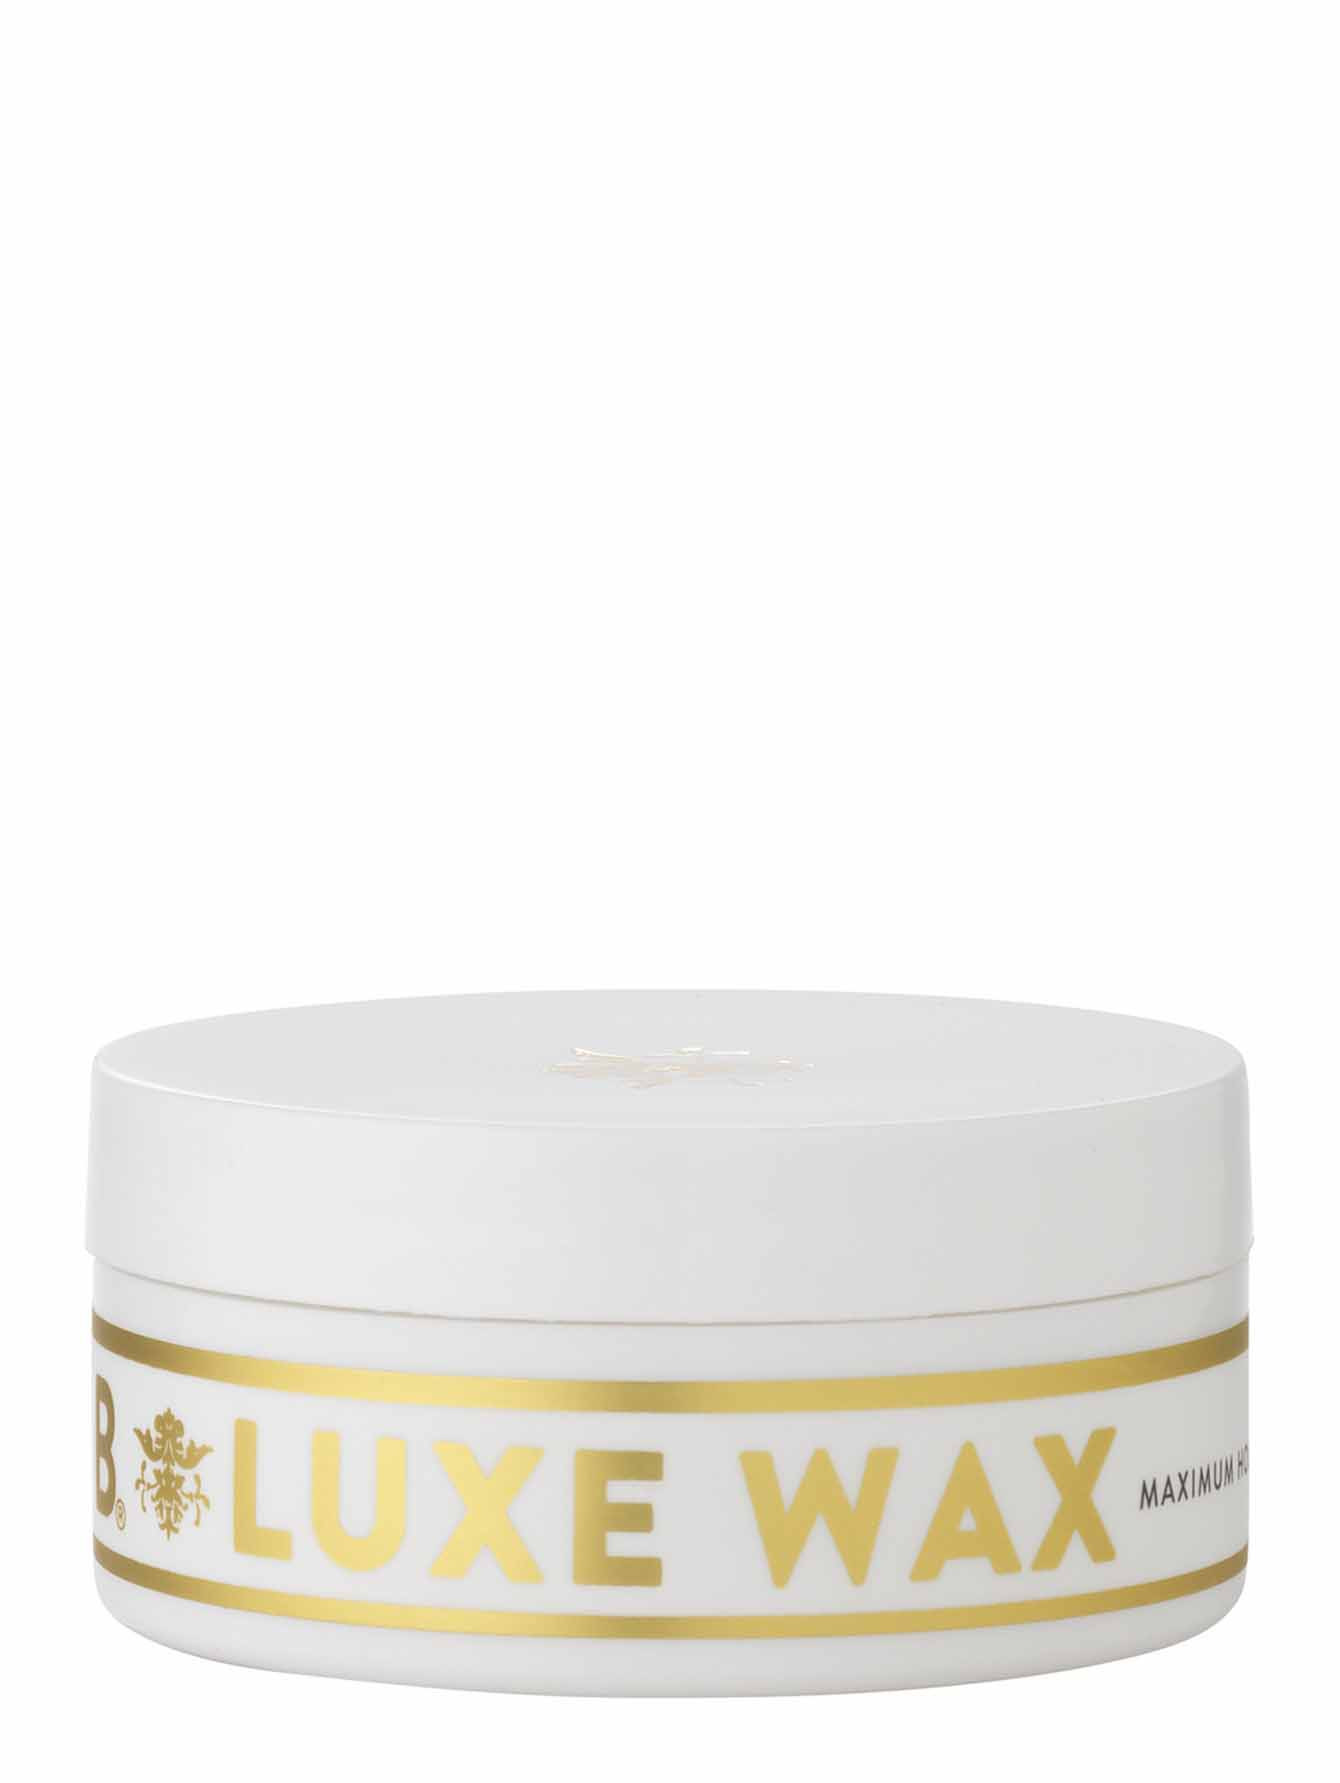 Воск для укладки волос Luxe Wax, 60 г - Общий вид